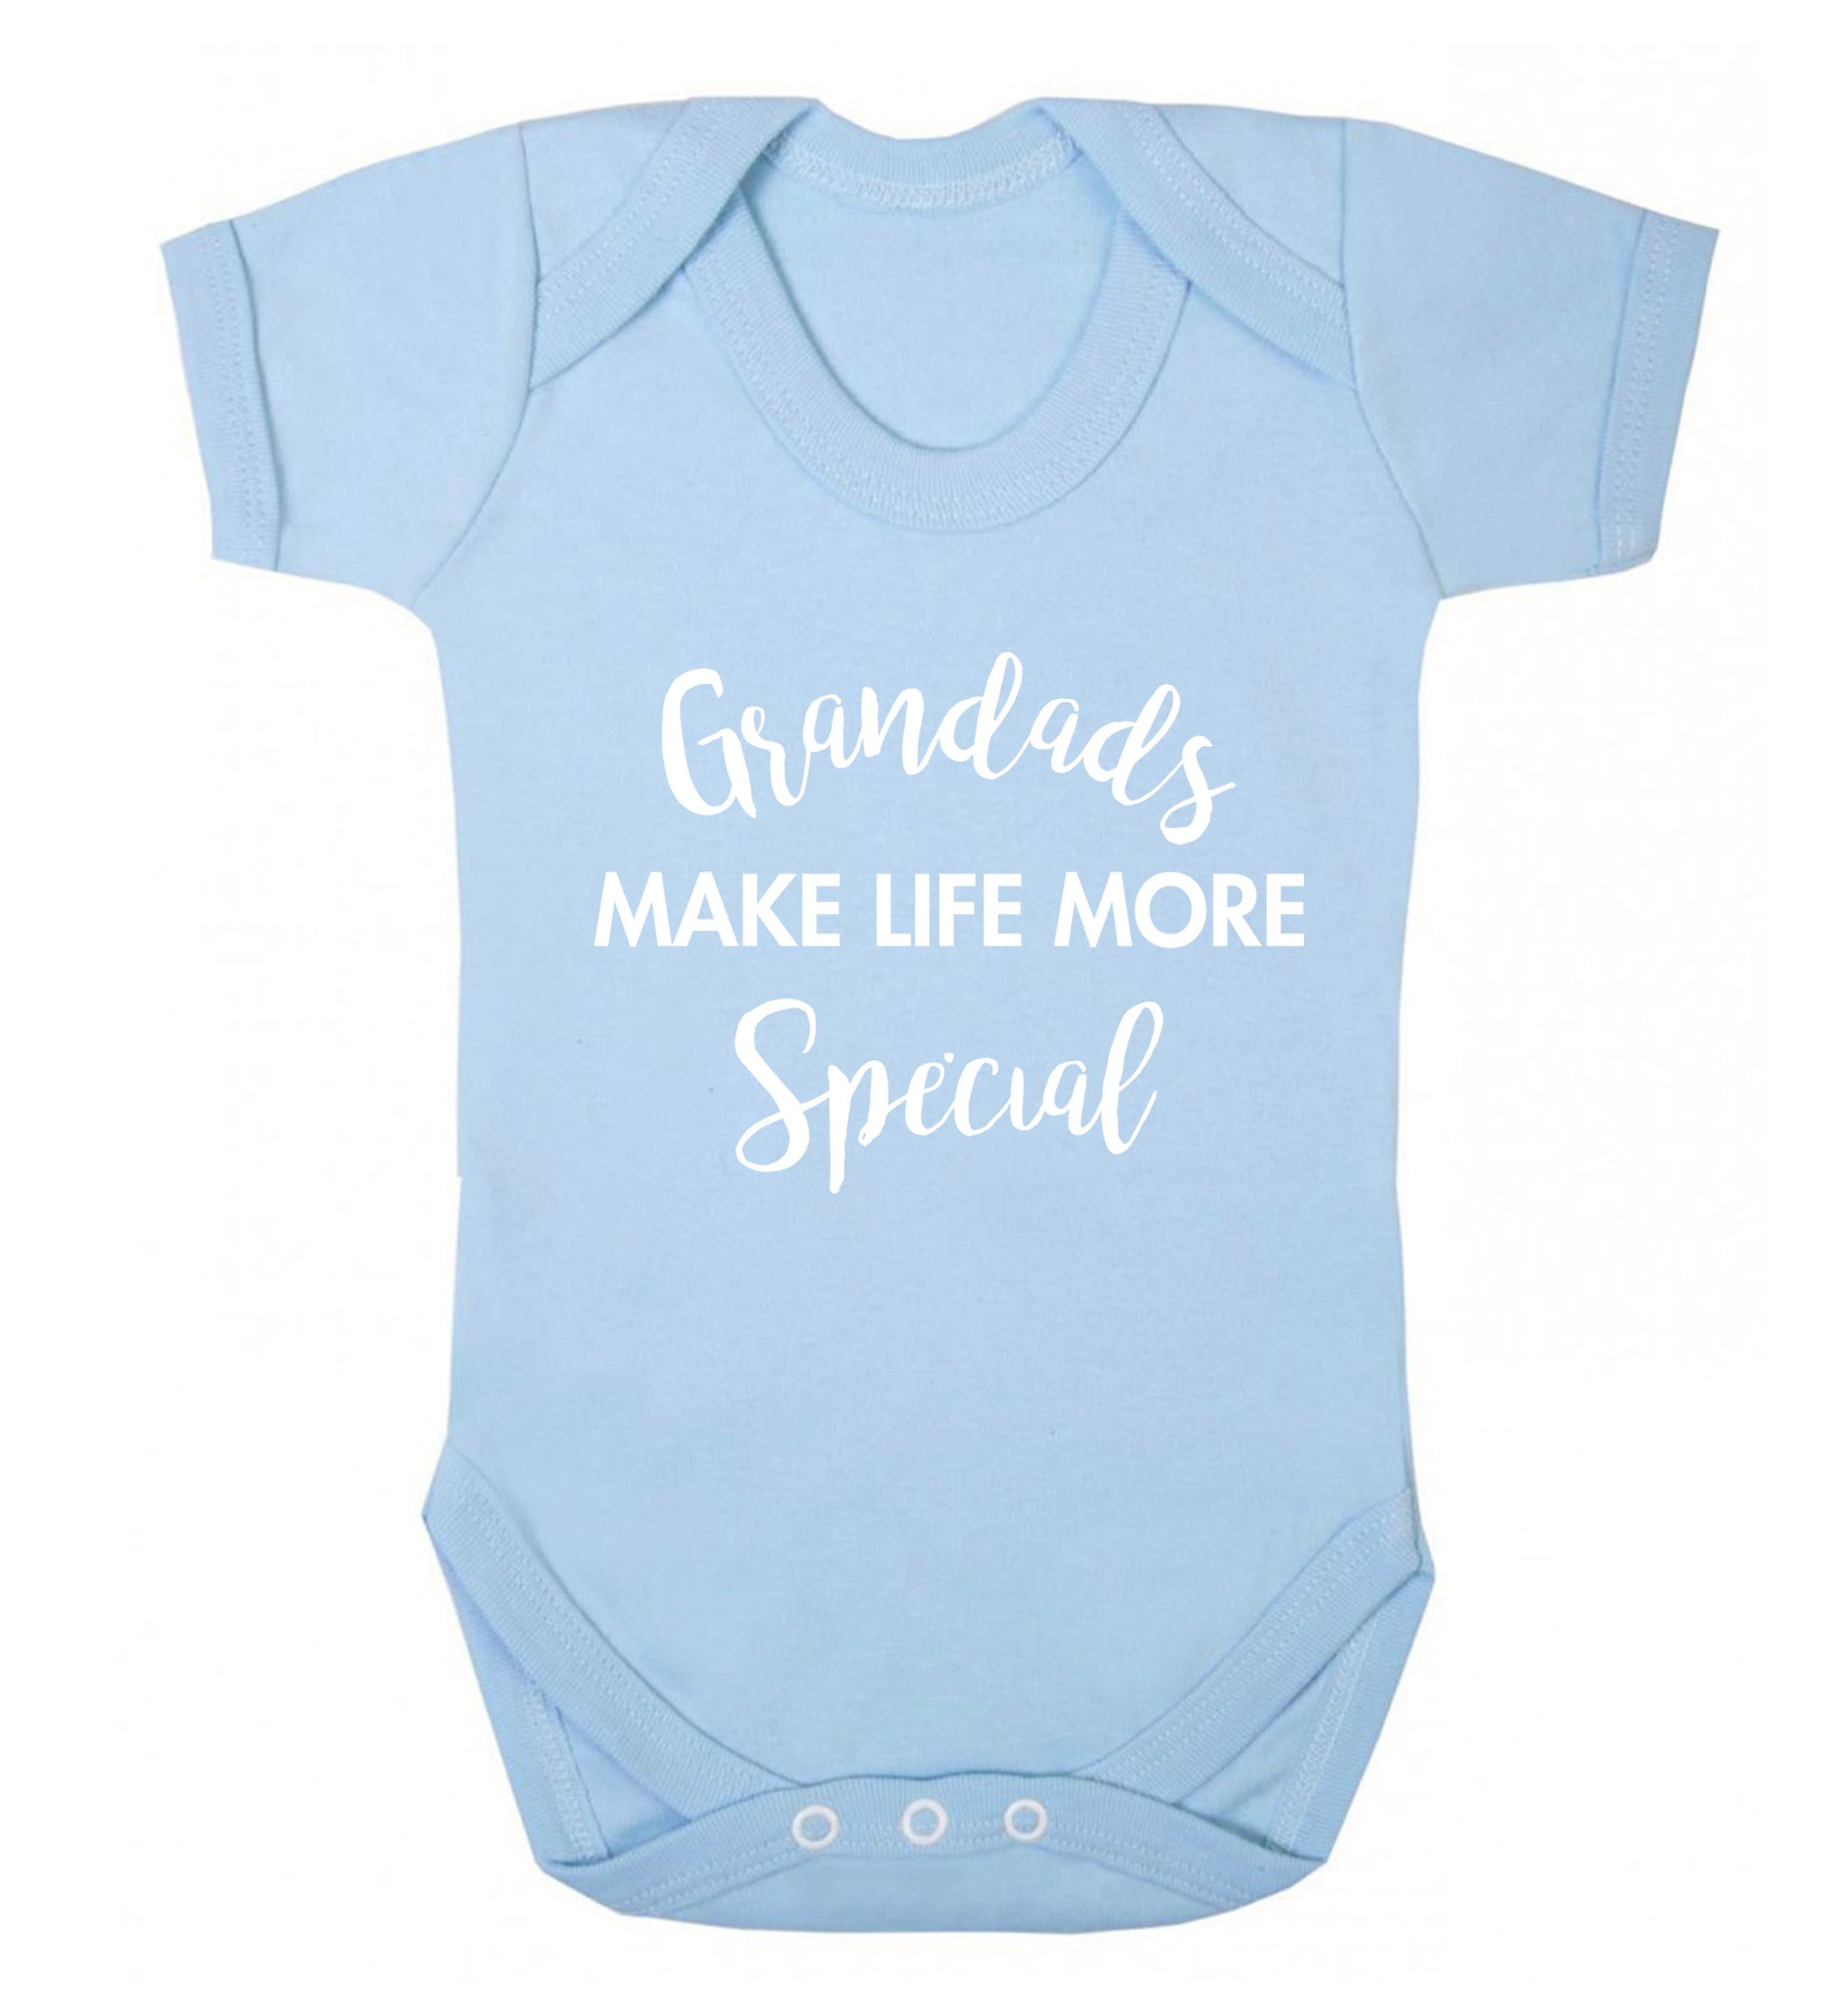 Grandads make life more special Baby Vest pale blue 18-24 months